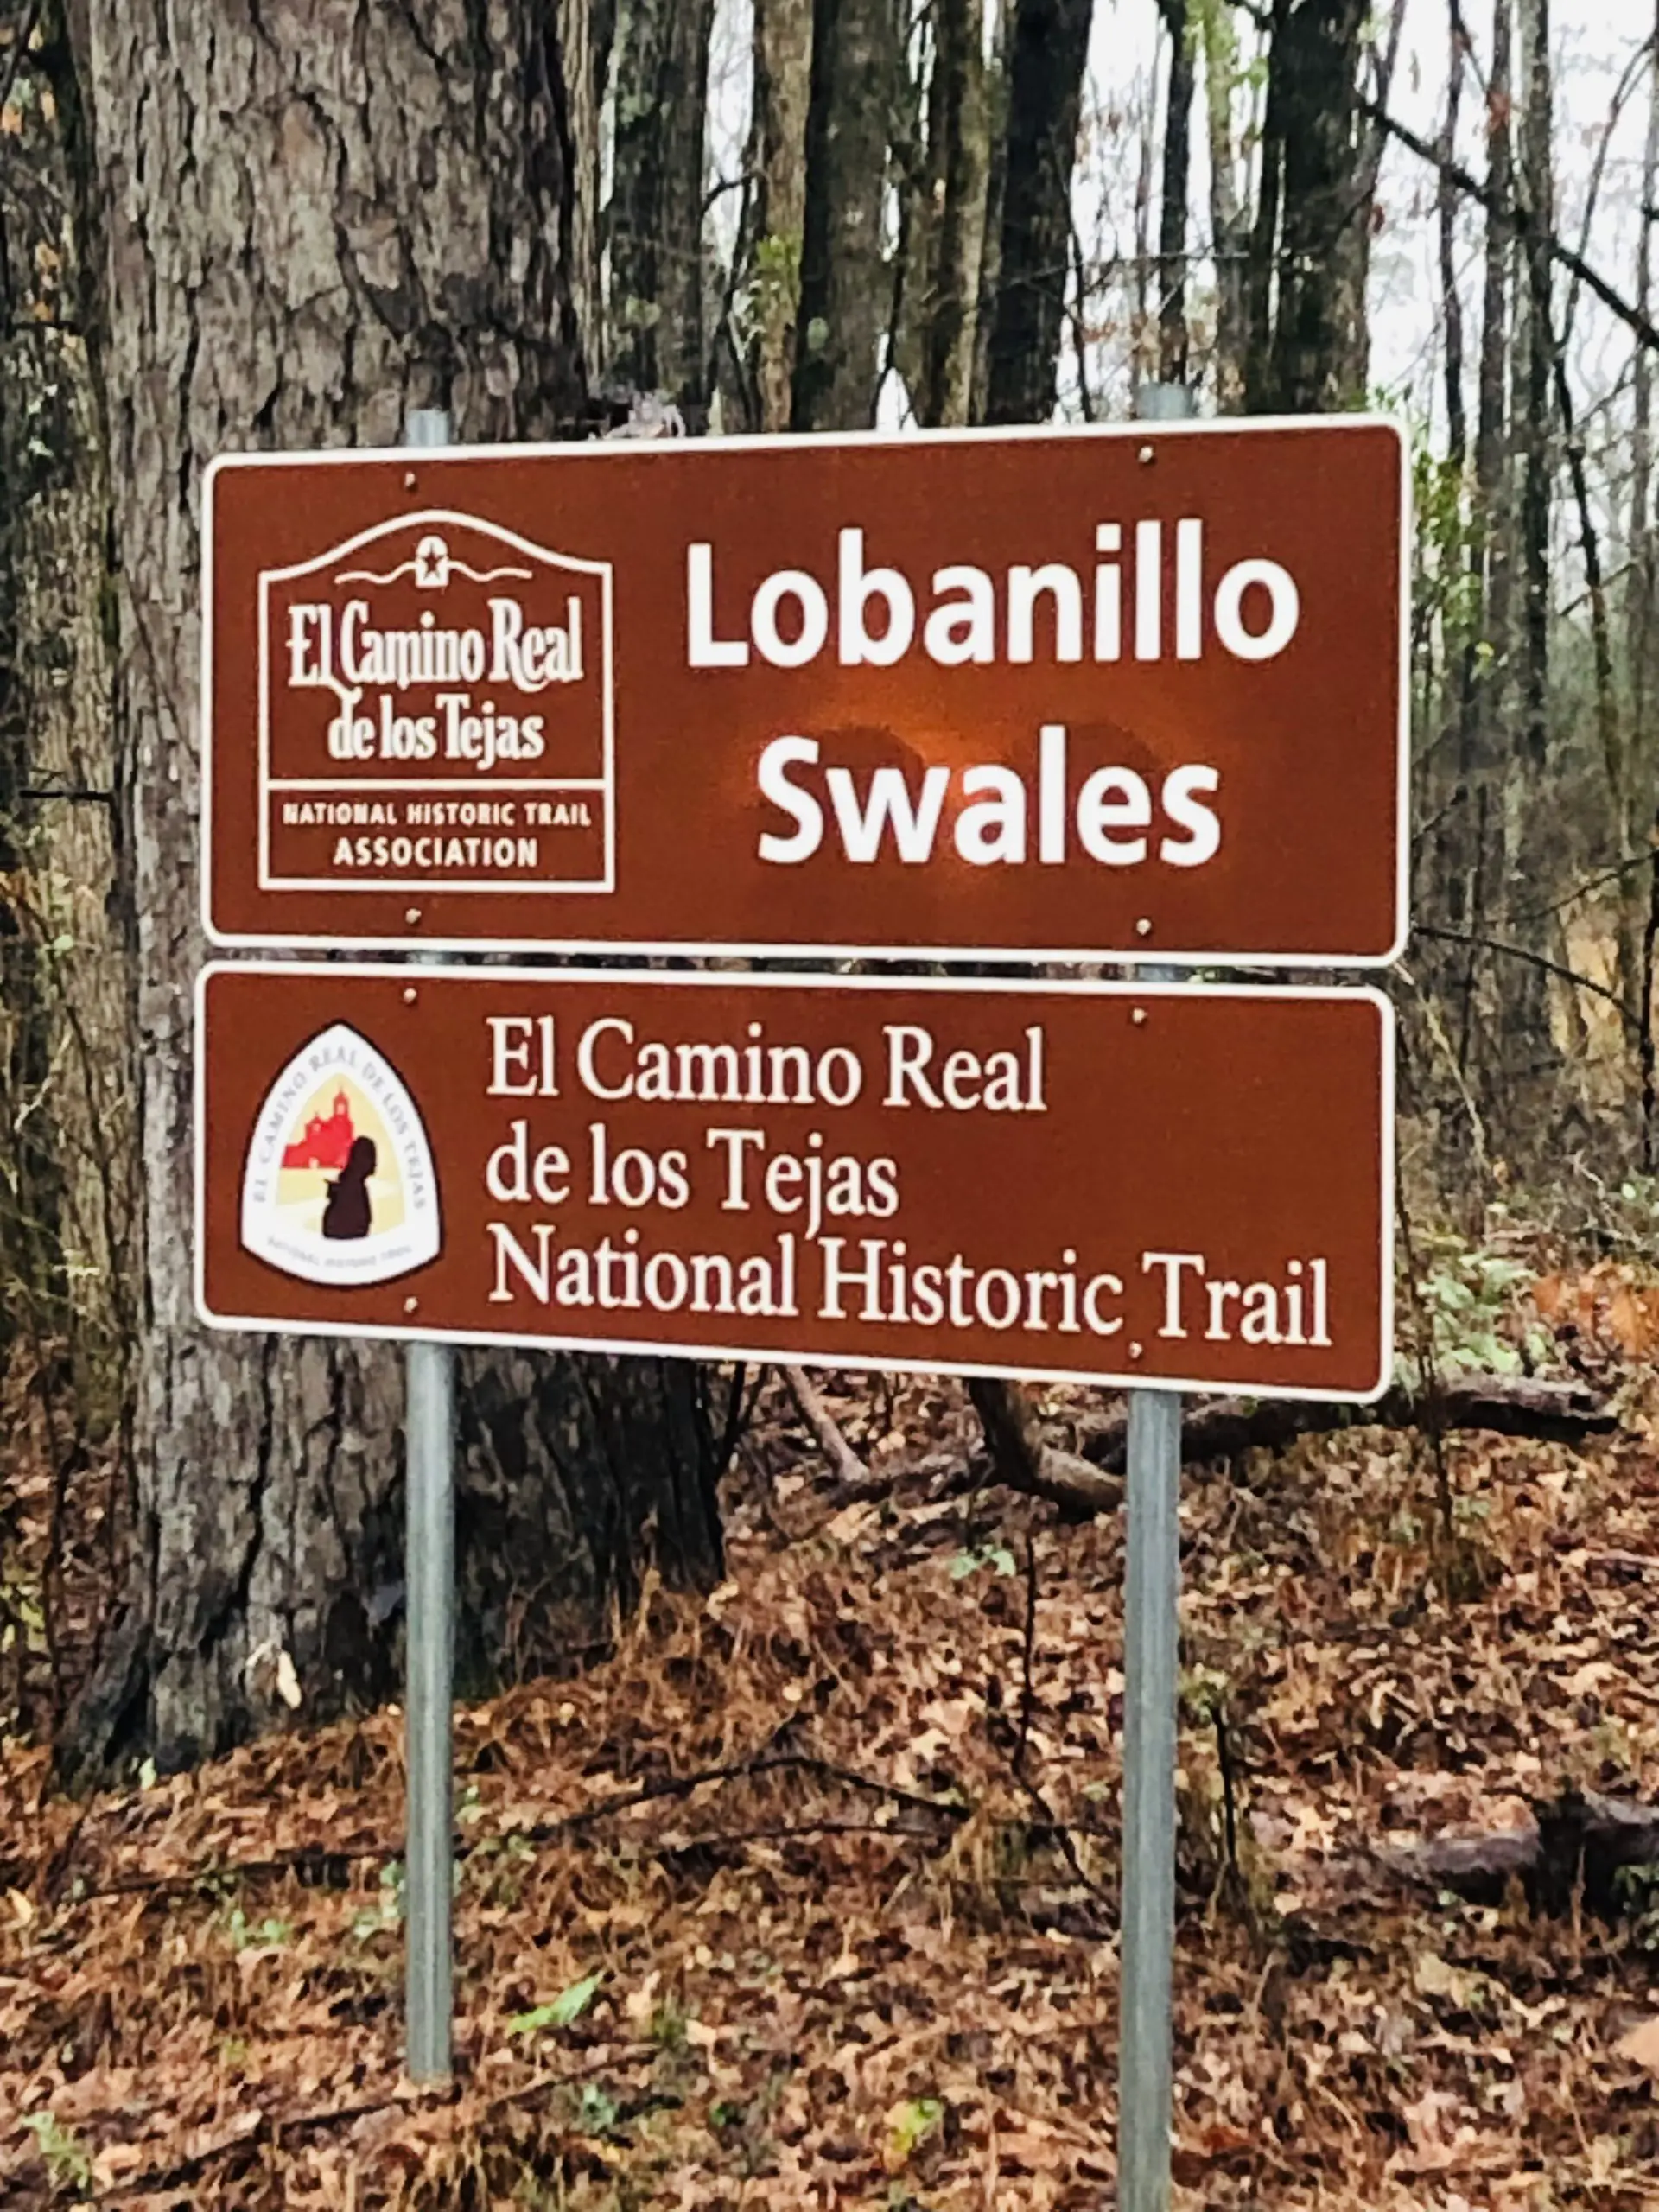 sign for Lobanillo Swales and El Camino Real